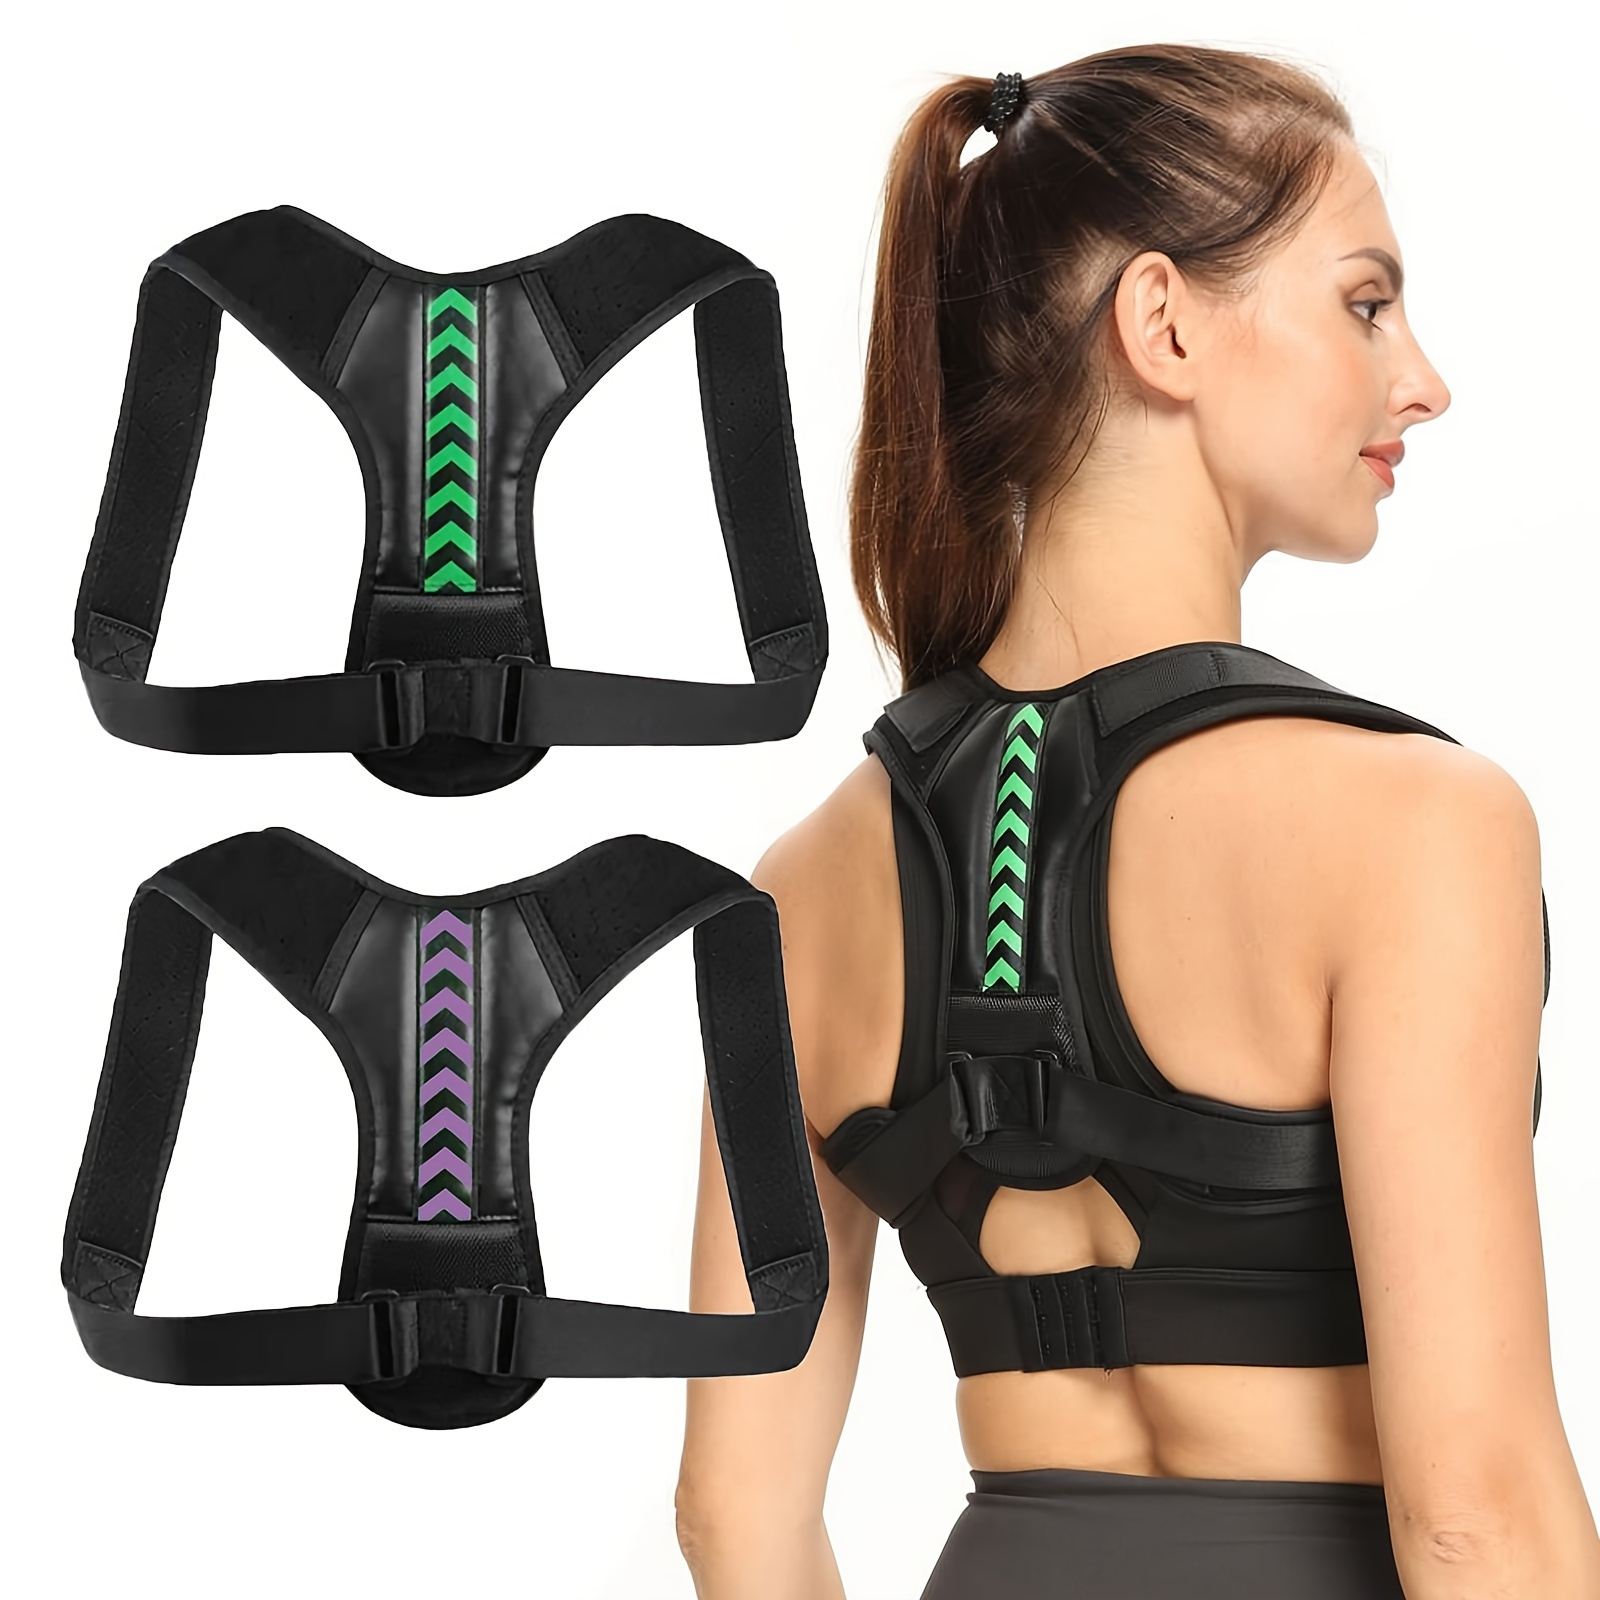 Unisex Posture Corrective Girdle Cervical Back Support Belts Posture  Corrector Corset Upright Posture Waist Trainer for Backache (Color : White,  Size